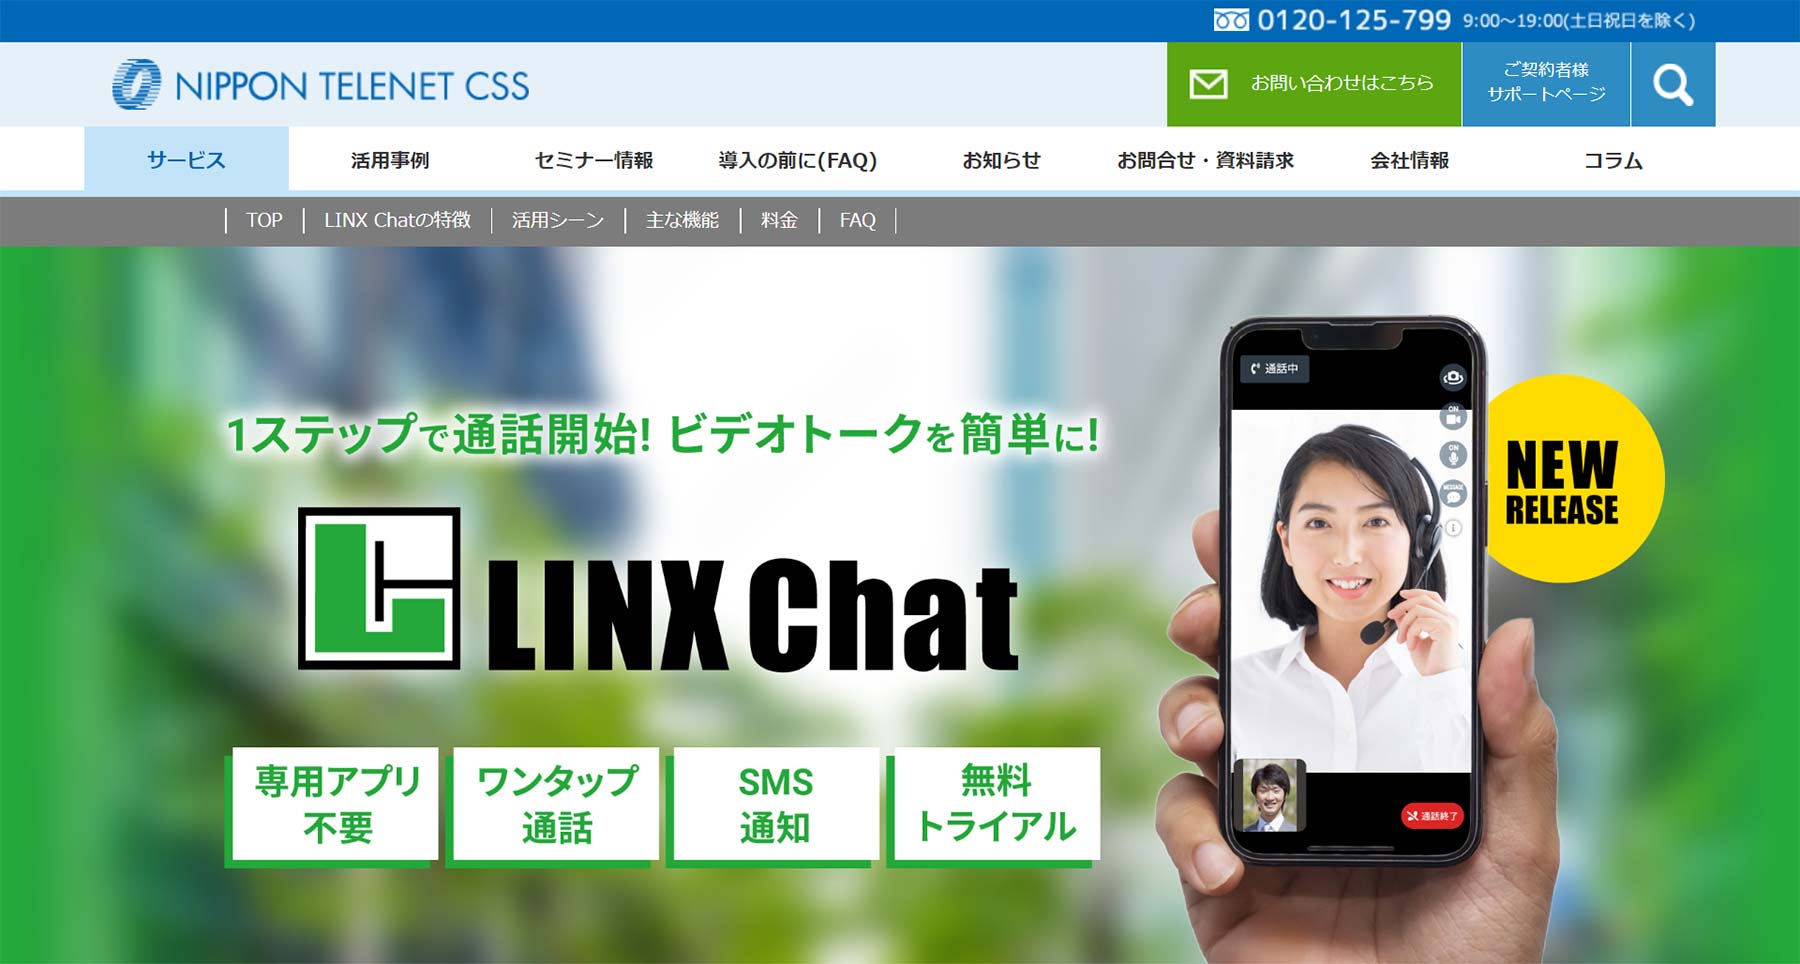 LINX Chat公式Webサイト